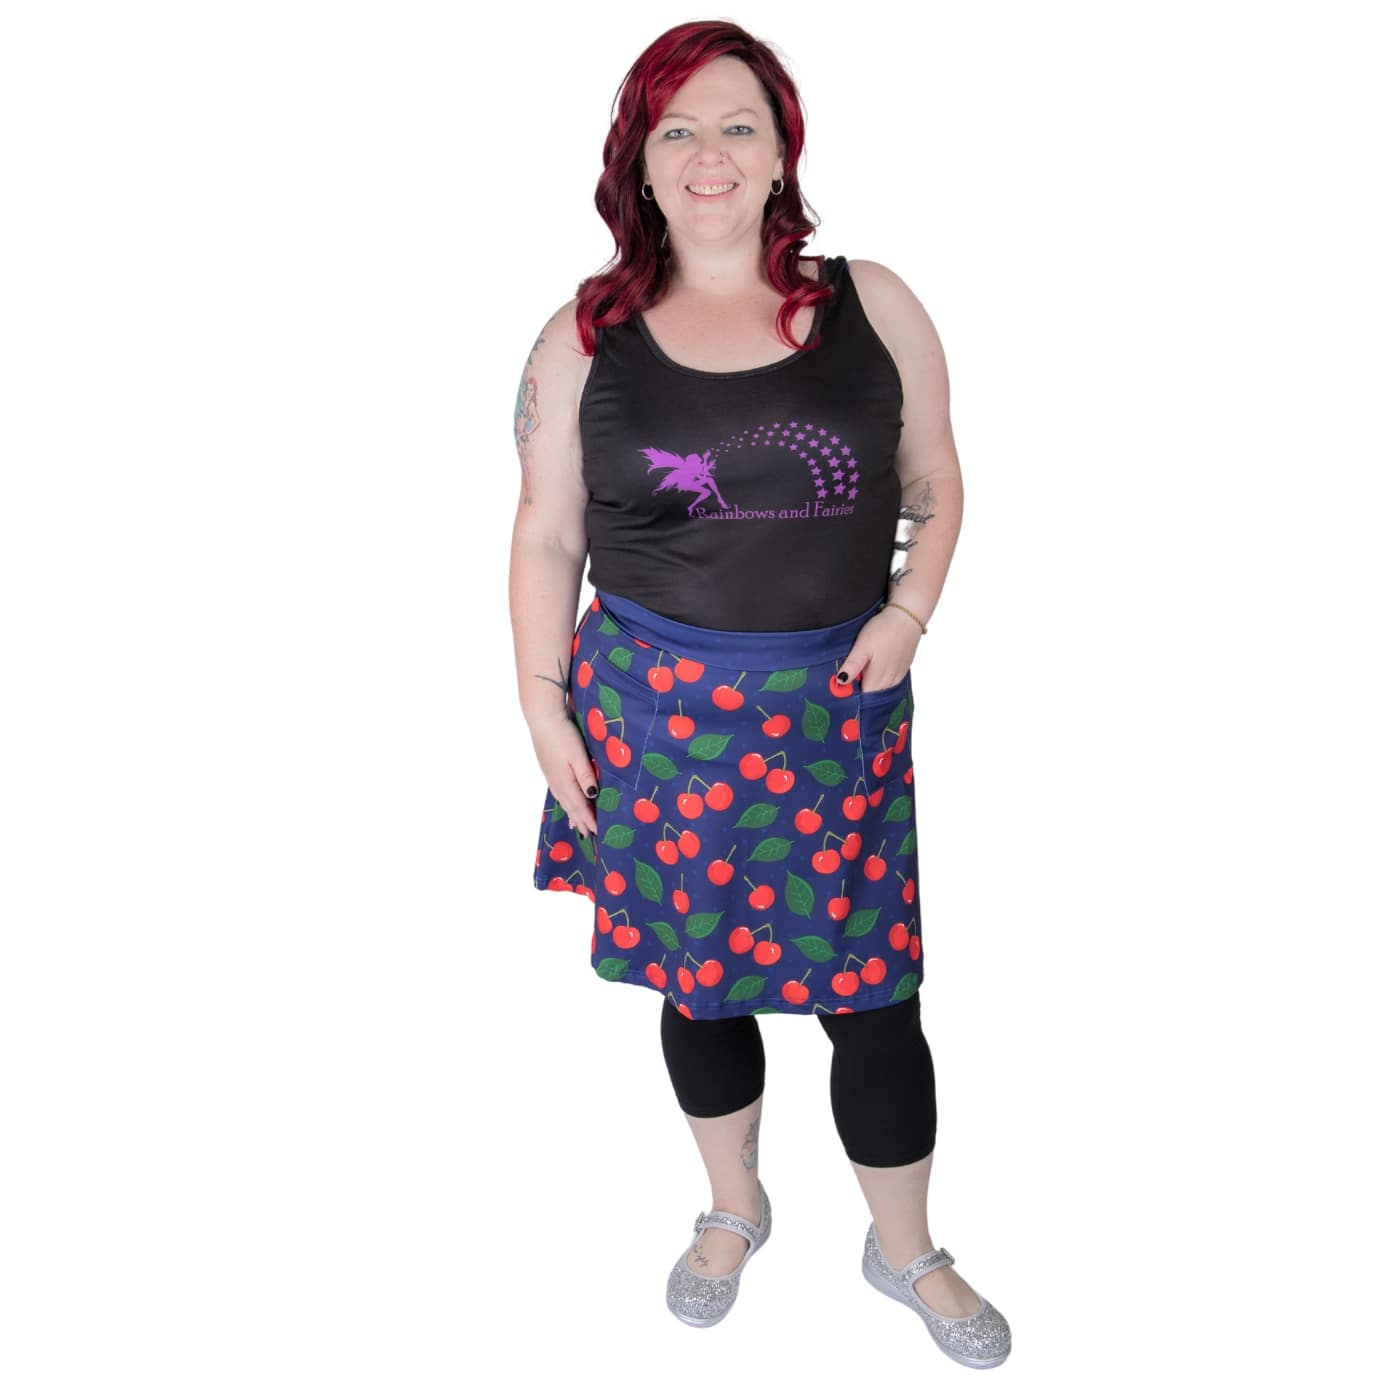 Cherry Short Skirt by RainbowsAndFairies.com.au (Cherries - Cherry Print - Rockabilly - Aline Skirt - Skirt With Pockets - Kitsch - Vintage Inspired) - SKU: CL_SHORT_CHERR_ORG - Pic-01